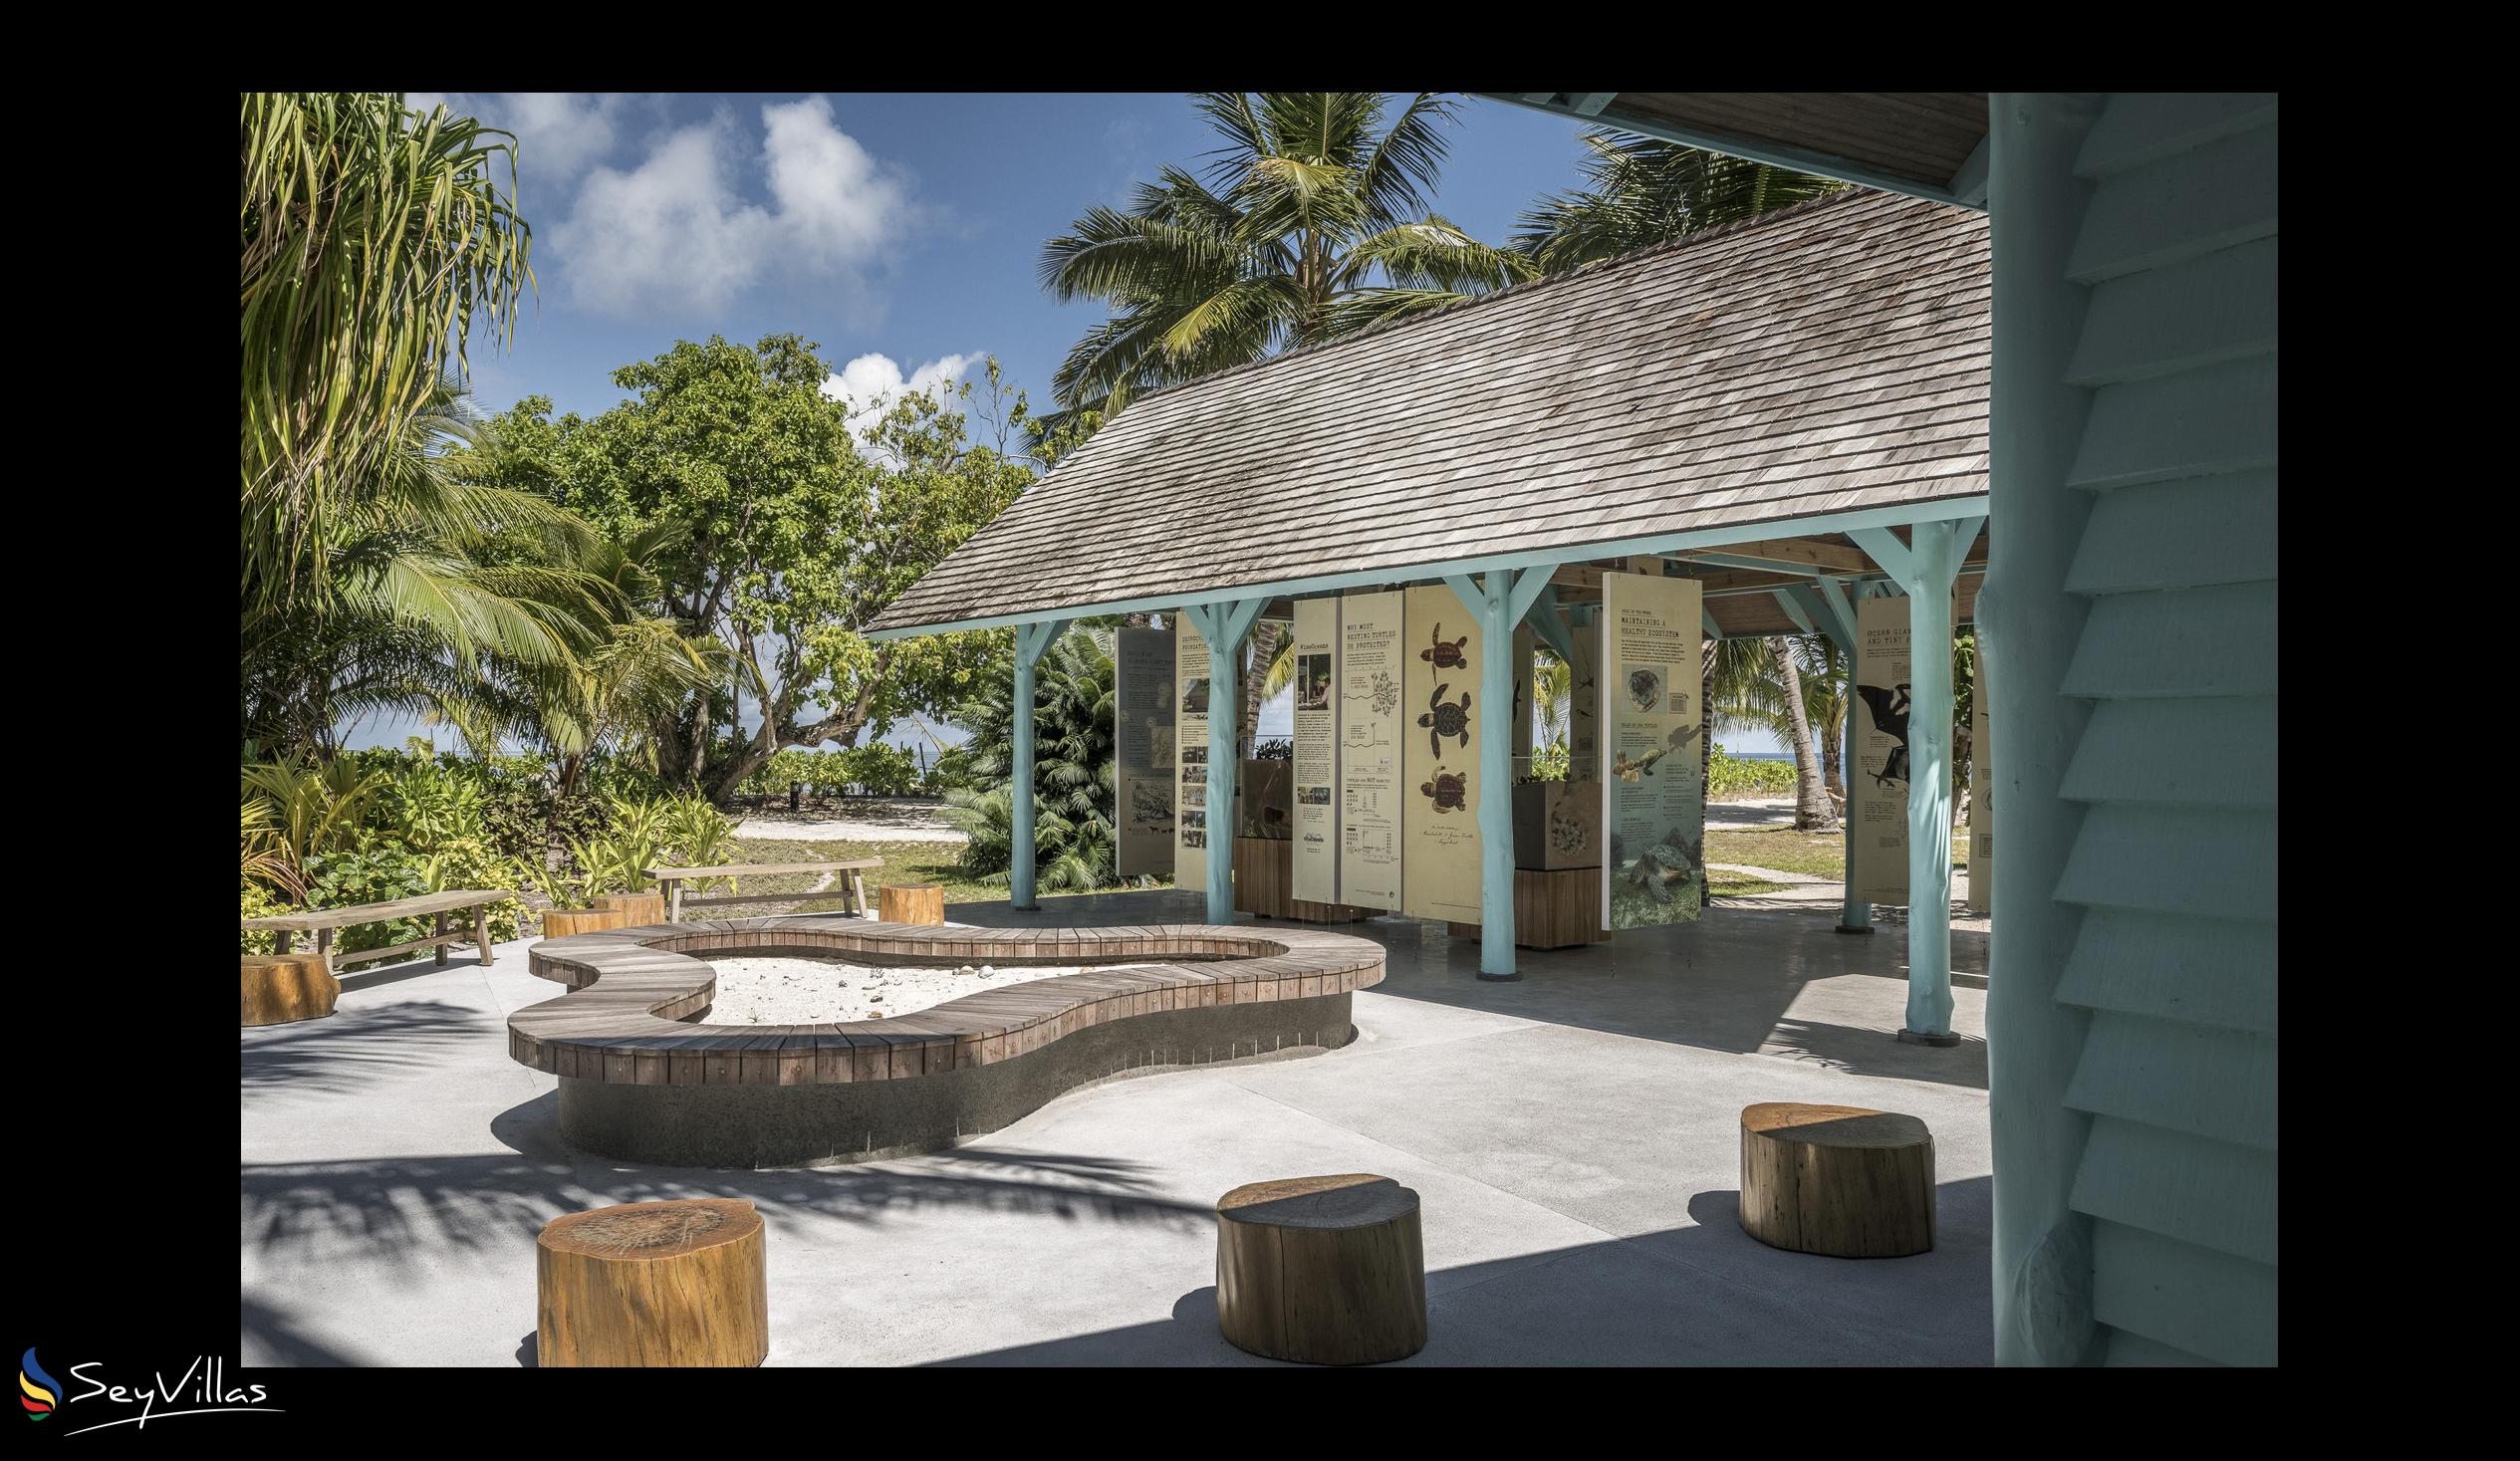 Foto 41: Four Seasons Resort Desroches Island - Interno - Desroches Island (Seychelles)